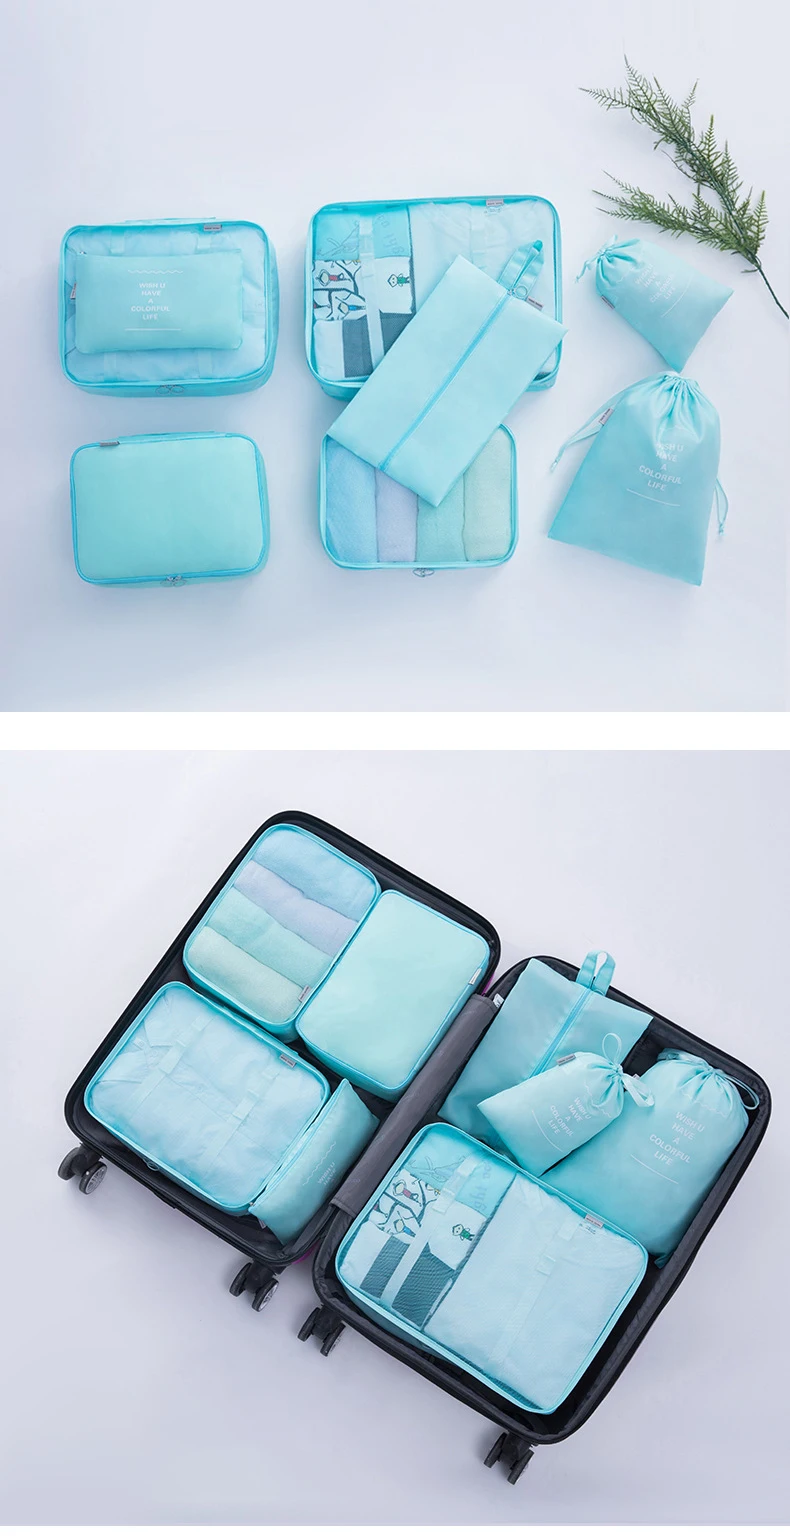 7 Pcs Travel Luggage Organizers Set Waterproof Suitcase Organizer Bags ...